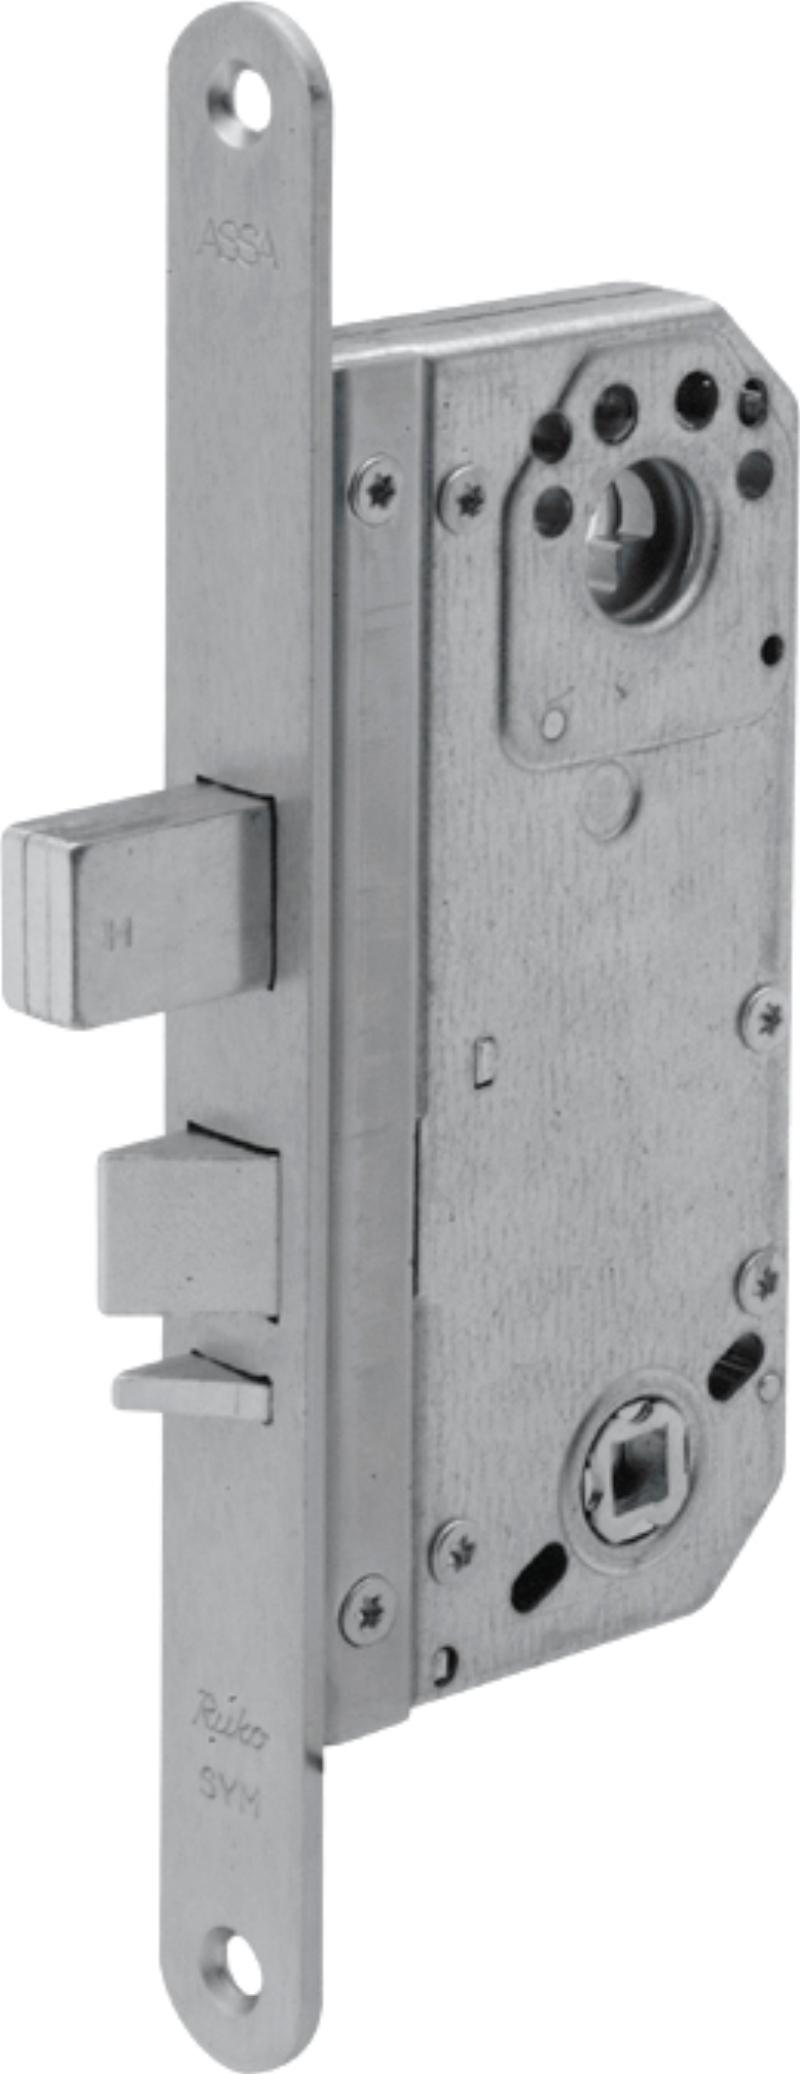 Assa lock case 1520 inwards w/ tin